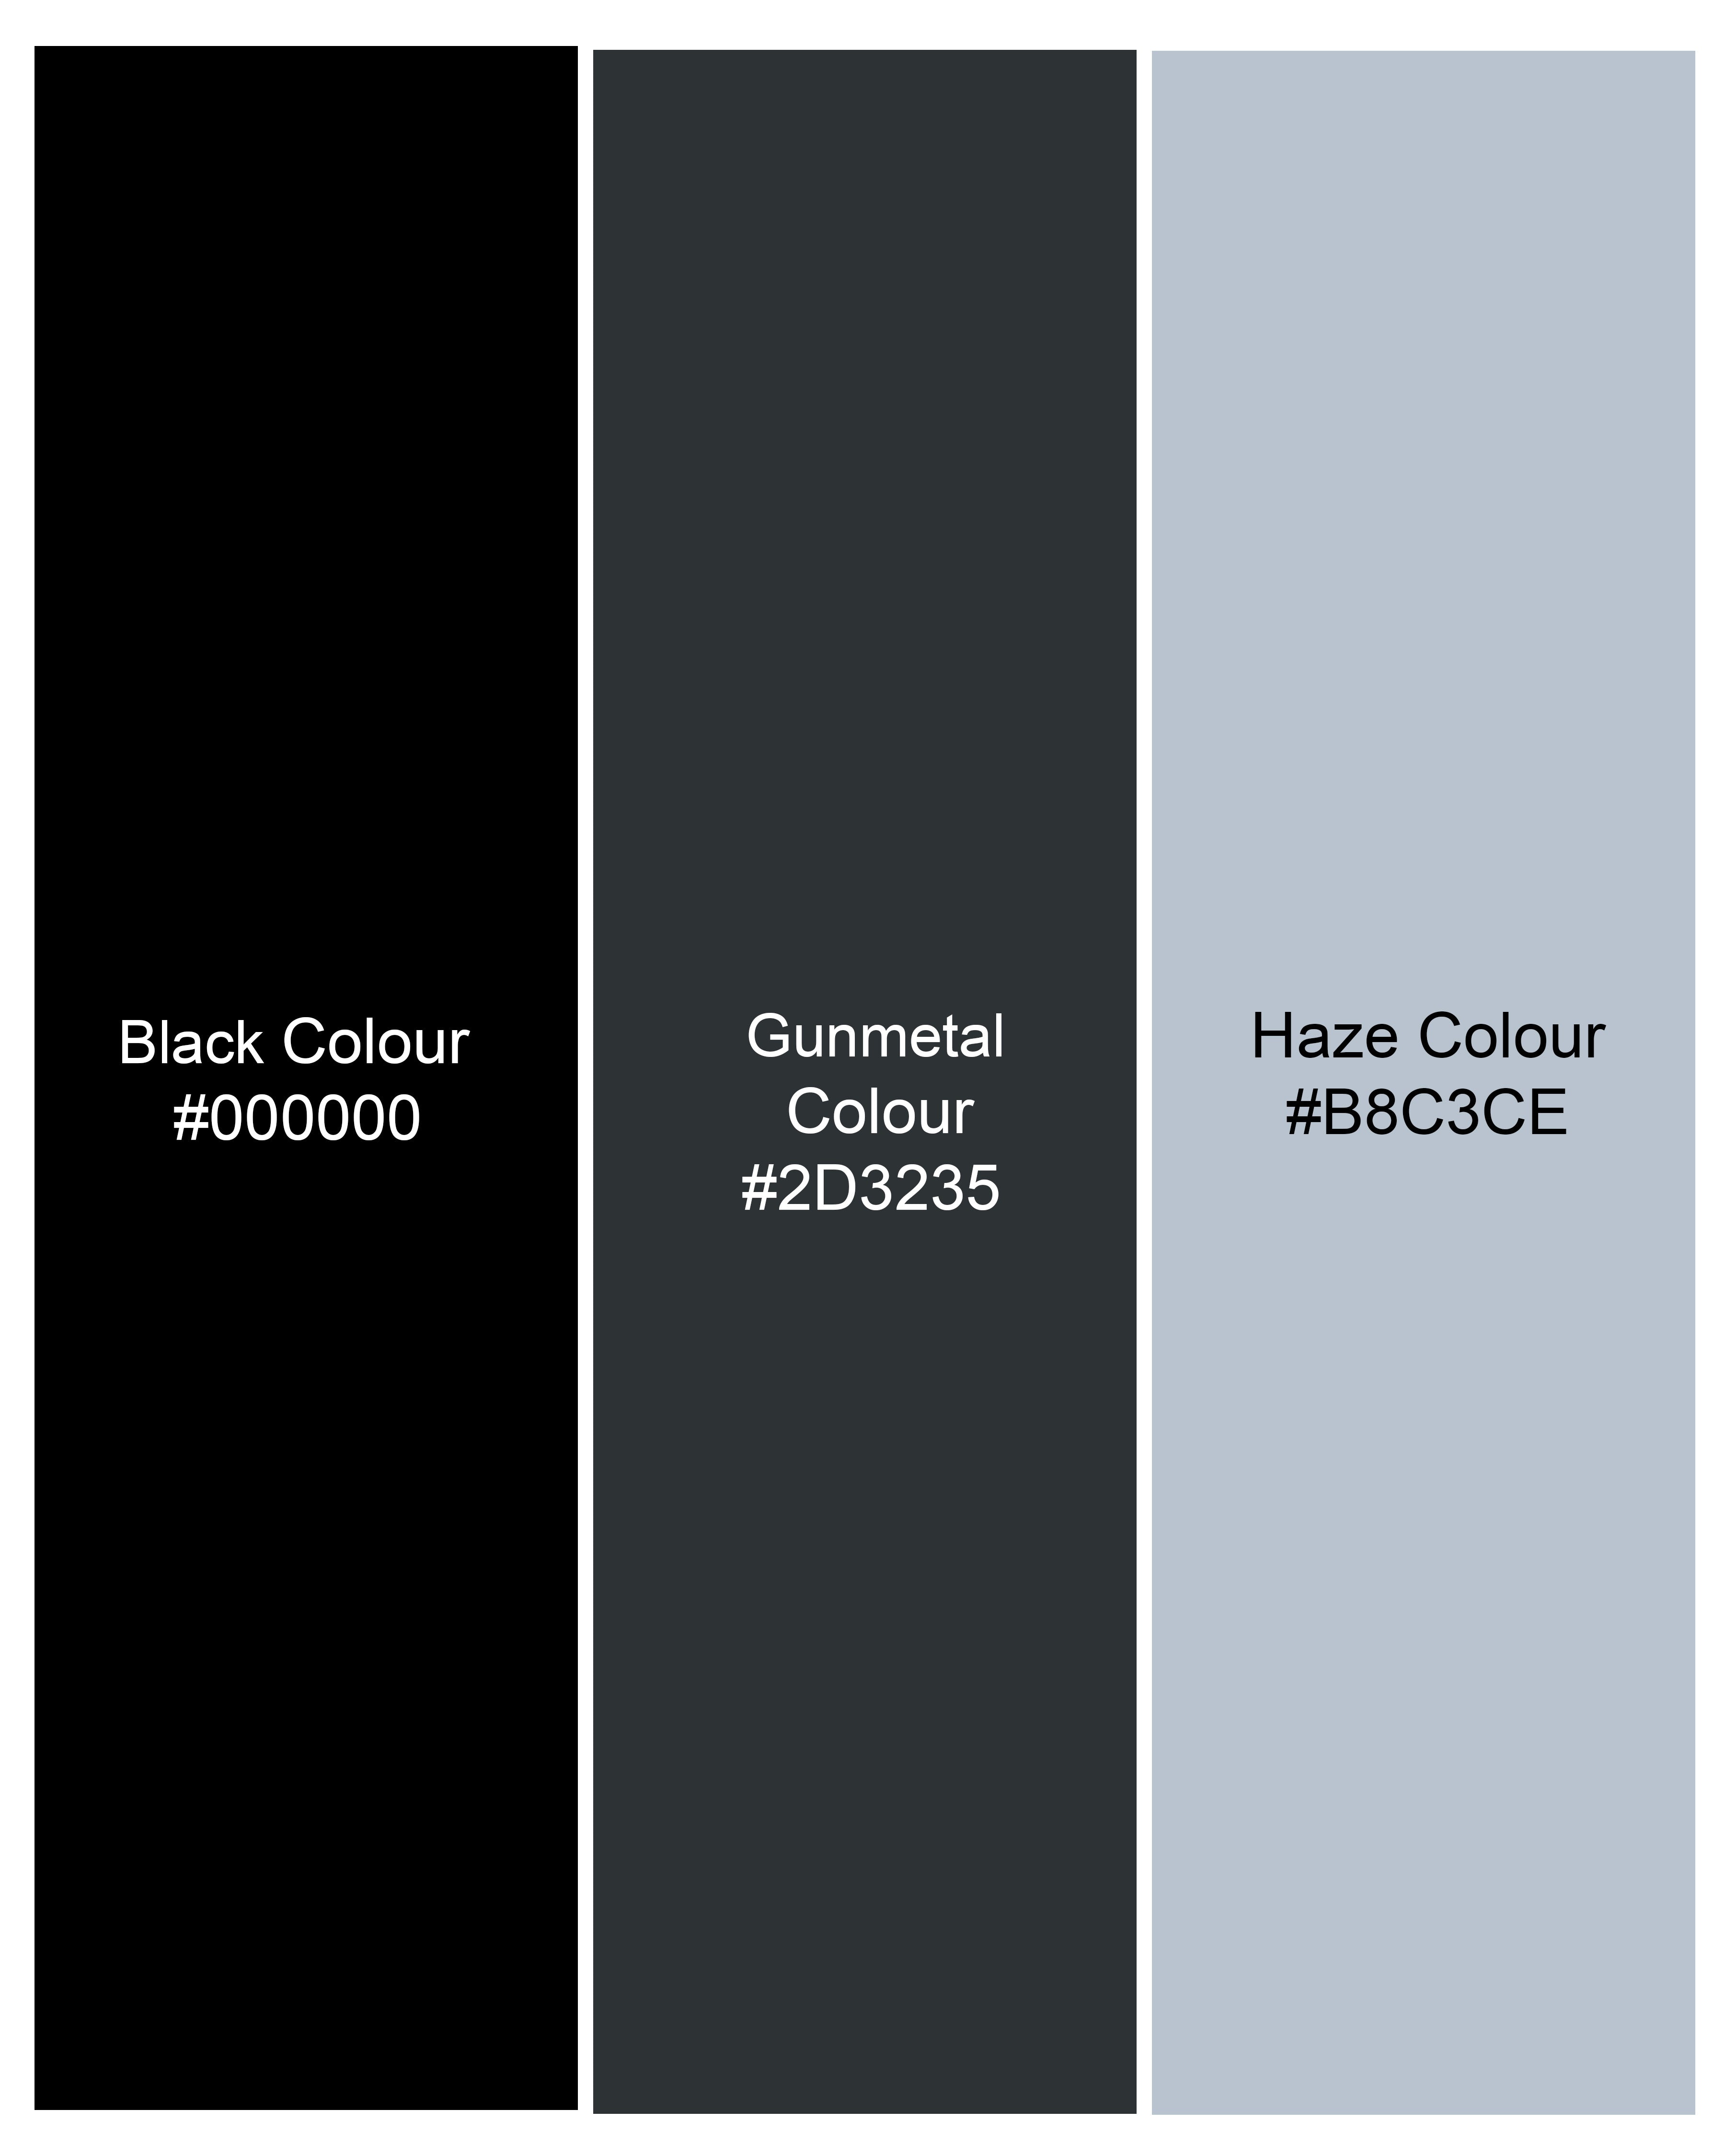 Jade Black with Gunmetal Gray and Haze Blue Camouflage Printed Royal Oxford Shirt 8911-BD-BLK-38, 8911-BD-BLK-H-38,  8911-BD-BLK-39,  8911-BD-BLK-H-39,  8911-BD-BLK-40,  8911-BD-BLK-H-40,  8911-BD-BLK-42,  8911-BD-BLK-H-42,  8911-BD-BLK-44,  8911-BD-BLK-H-44,  8911-BD-BLK-46,  8911-BD-BLK-H-46,  8911-BD-BLK-48,  8911-BD-BLK-H-48,  8911-BD-BLK-50,  8911-BD-BLK-H-50,  8911-BD-BLK-52,  8911-BD-BLK-H-52